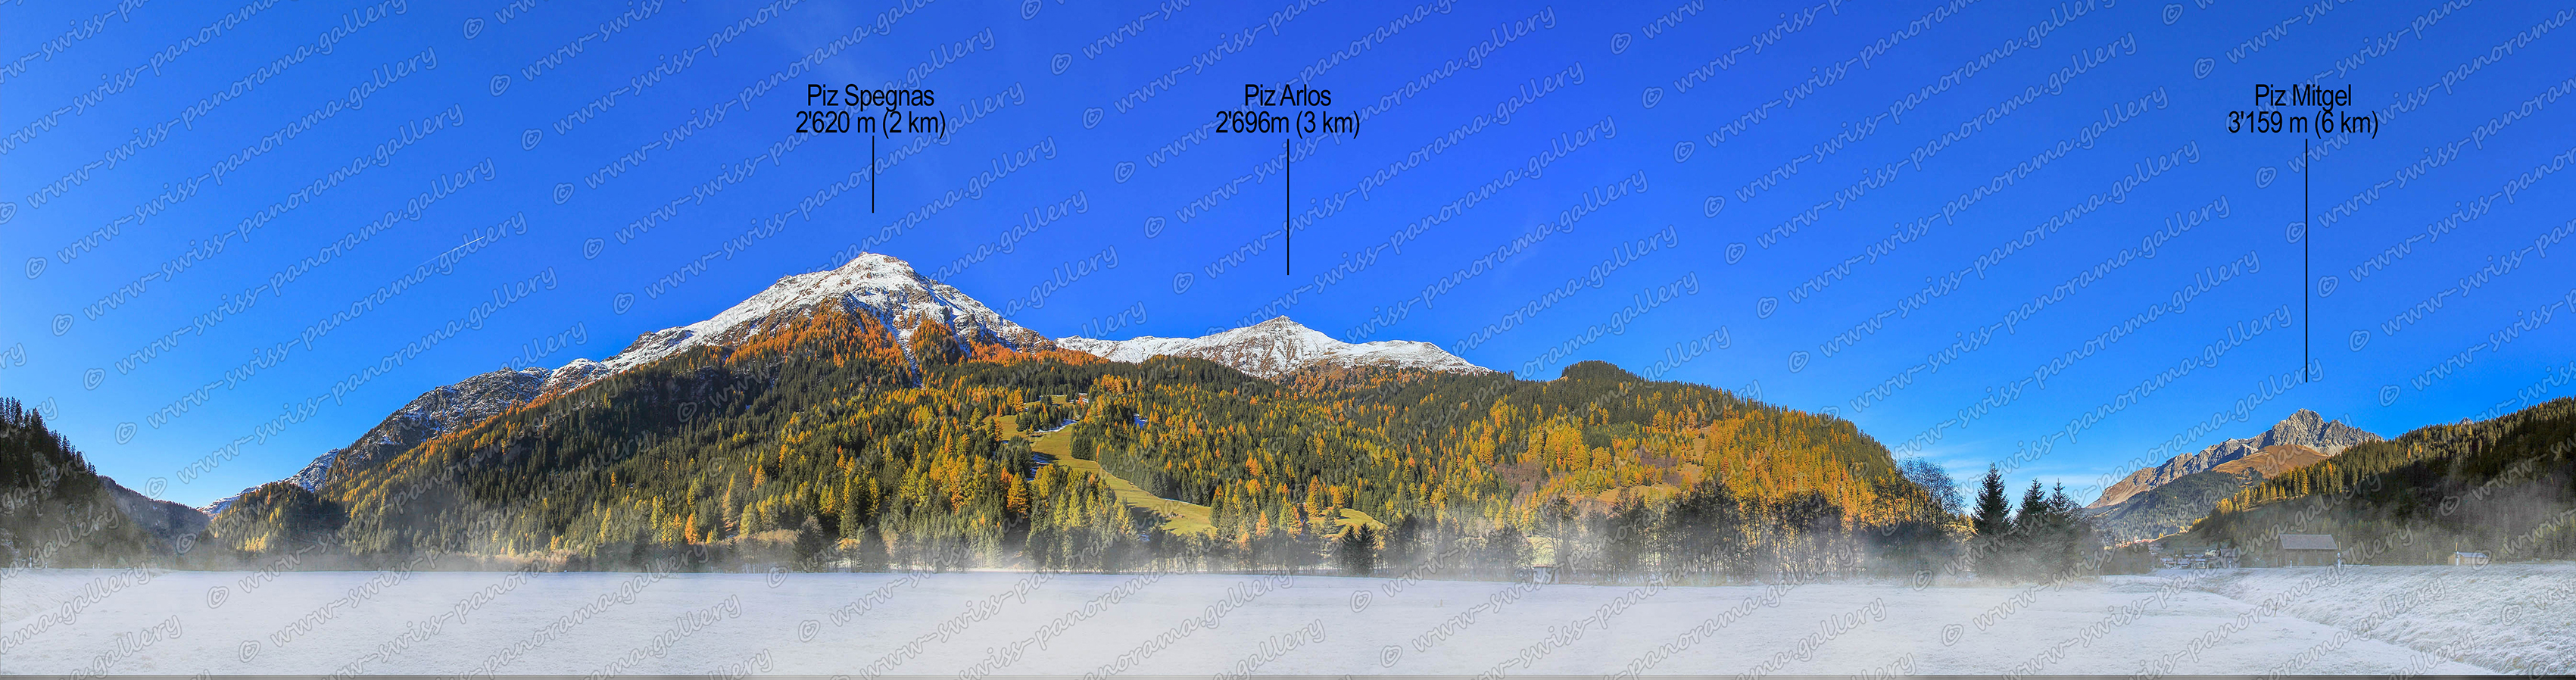 Rona panorama Switzerland Marmorera See; Val Surses; Muotta 2069m 1.8km; Crap da Dadons 2366m 4.7km; Piz Grevasalvas 2’932 m (10 km) Kopie; Piz Mitgel 3159m 11.7km; Piz Spegnas 2620m 4.7km swiss-panorama.gallery, Oberhalbstein panorama, Rona Ebene, Val Surses, Piz Mitgel 3'159 m (6 km). Piz Arlos 2'696 m (3 km), Piz Spegnas 2'620 m (2 km)